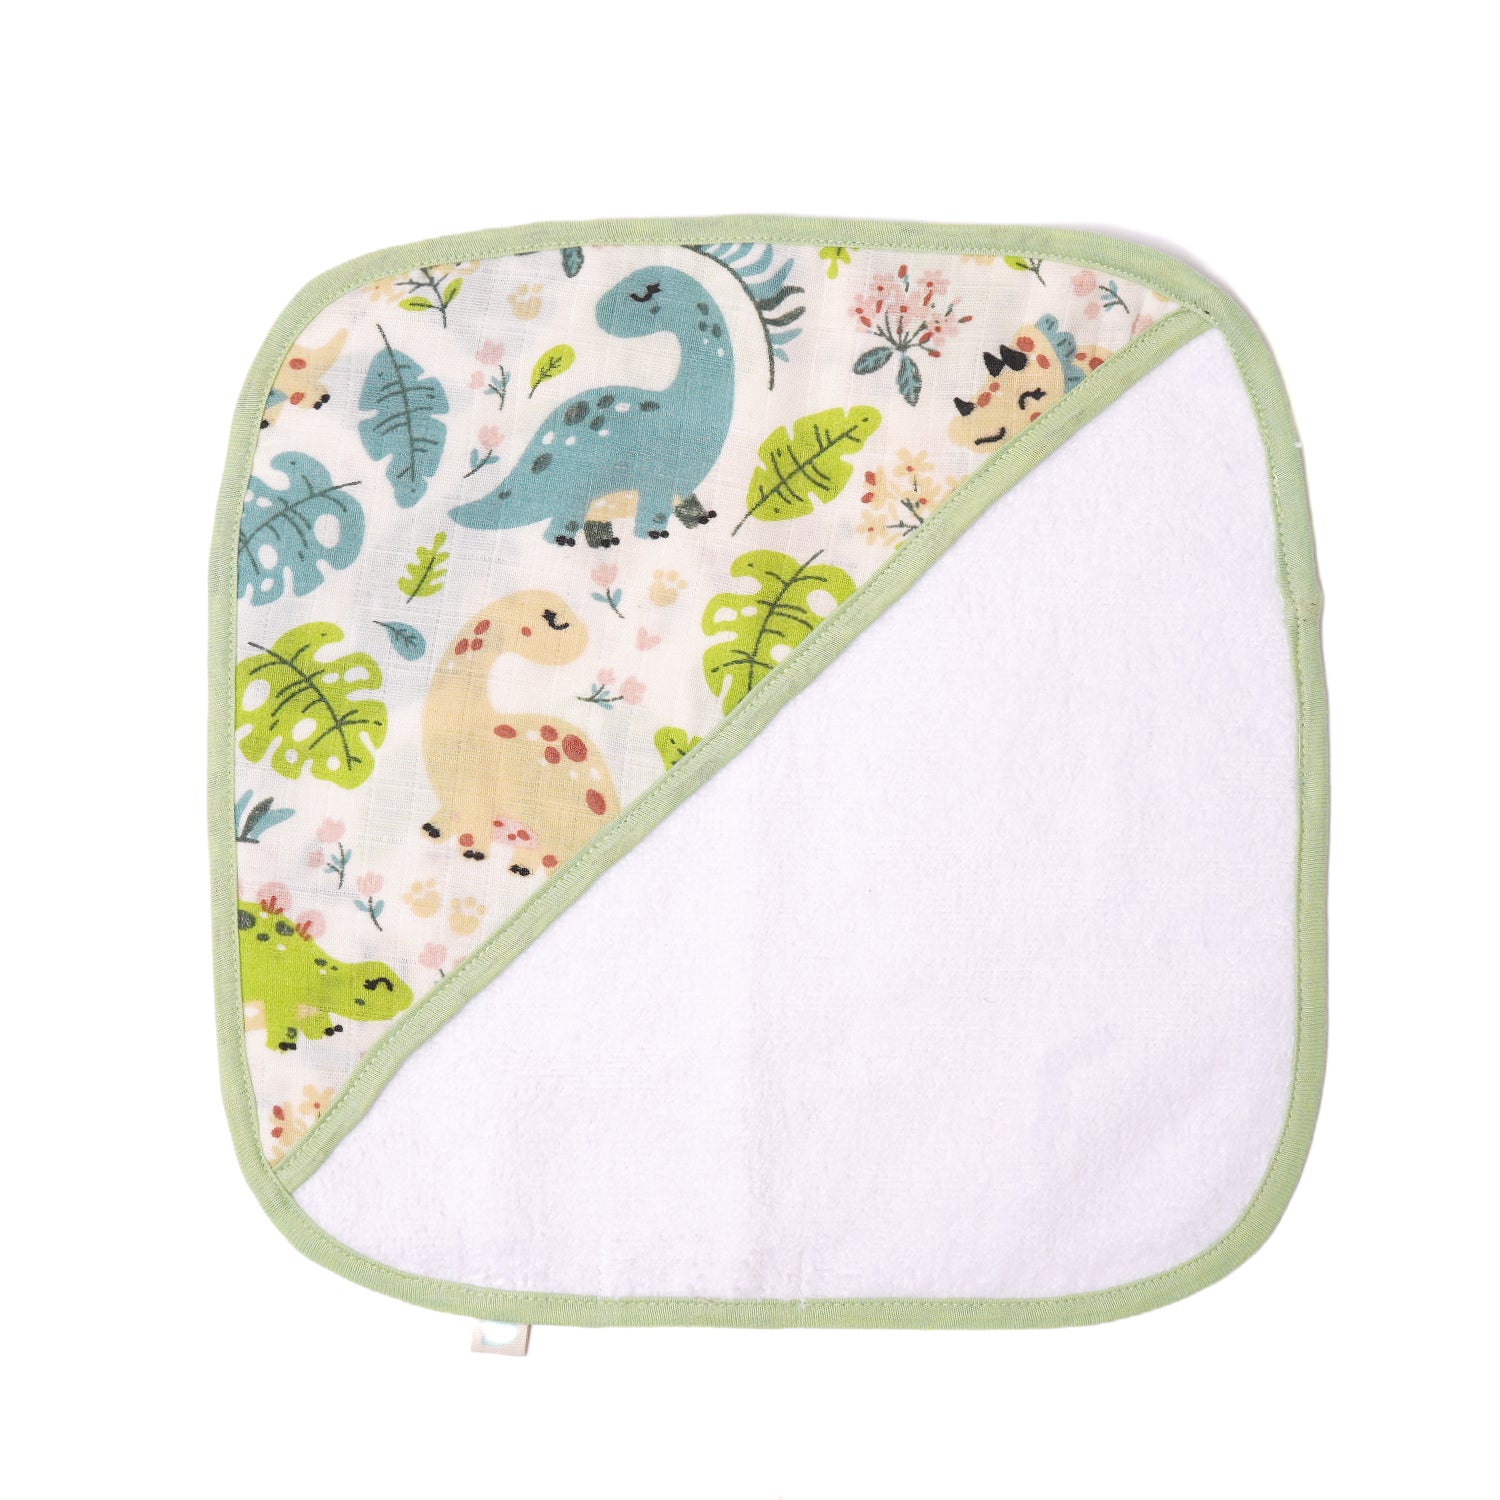 Tidy Sleep Muslin Baby Face Cloth for New Born (Washable, Reusable Extra Soft Baby Face Towel) Asorted Colour